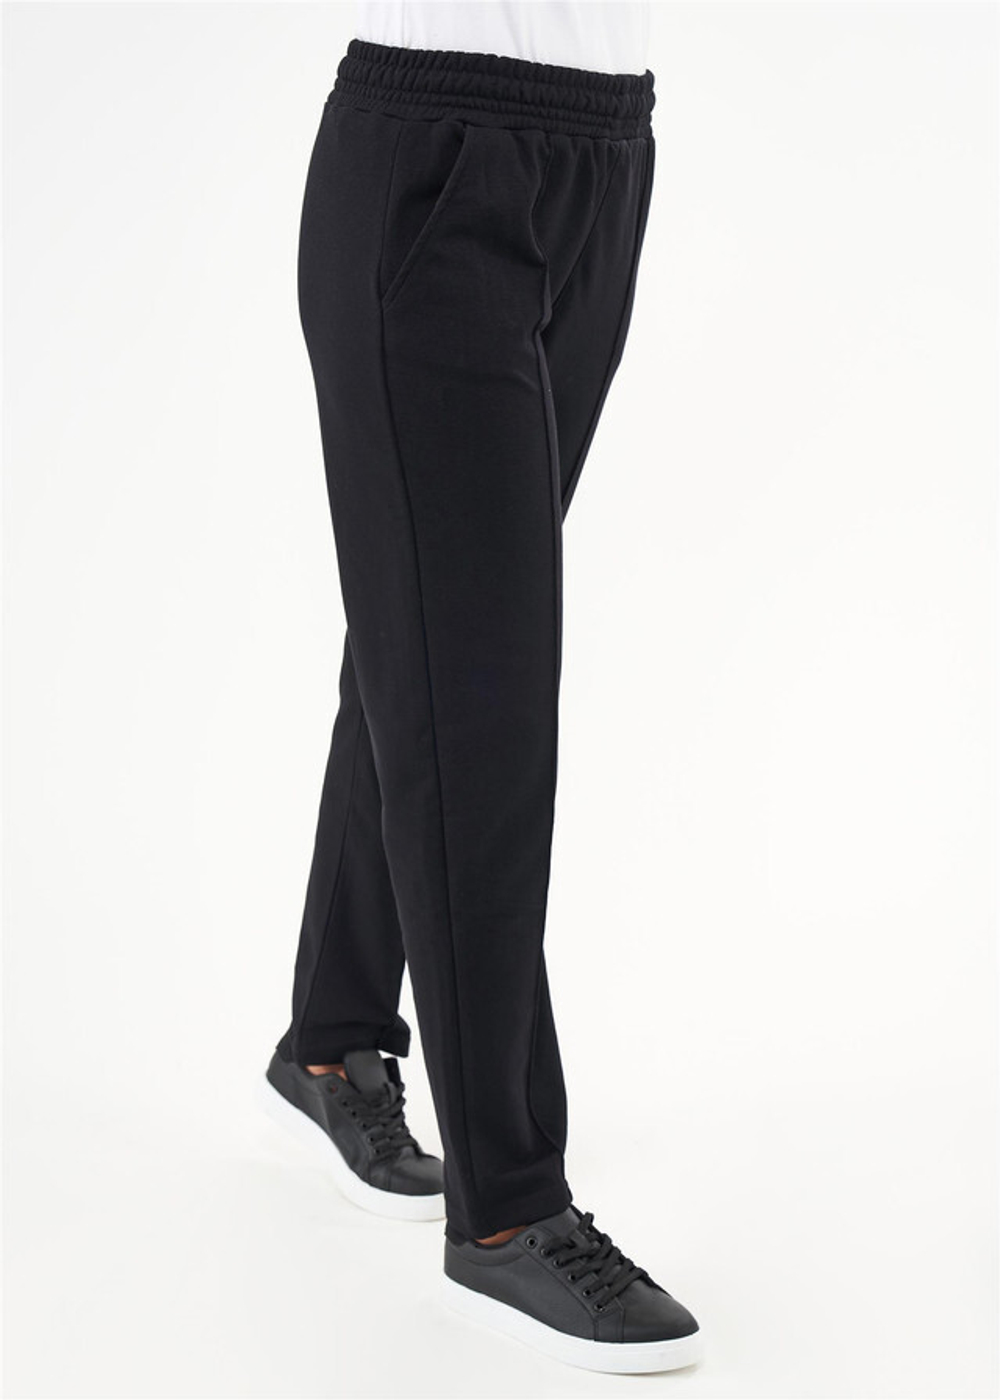 RELAX MODE / Спортивные штаны женские брюки женские спортивные трикотаж - 40074